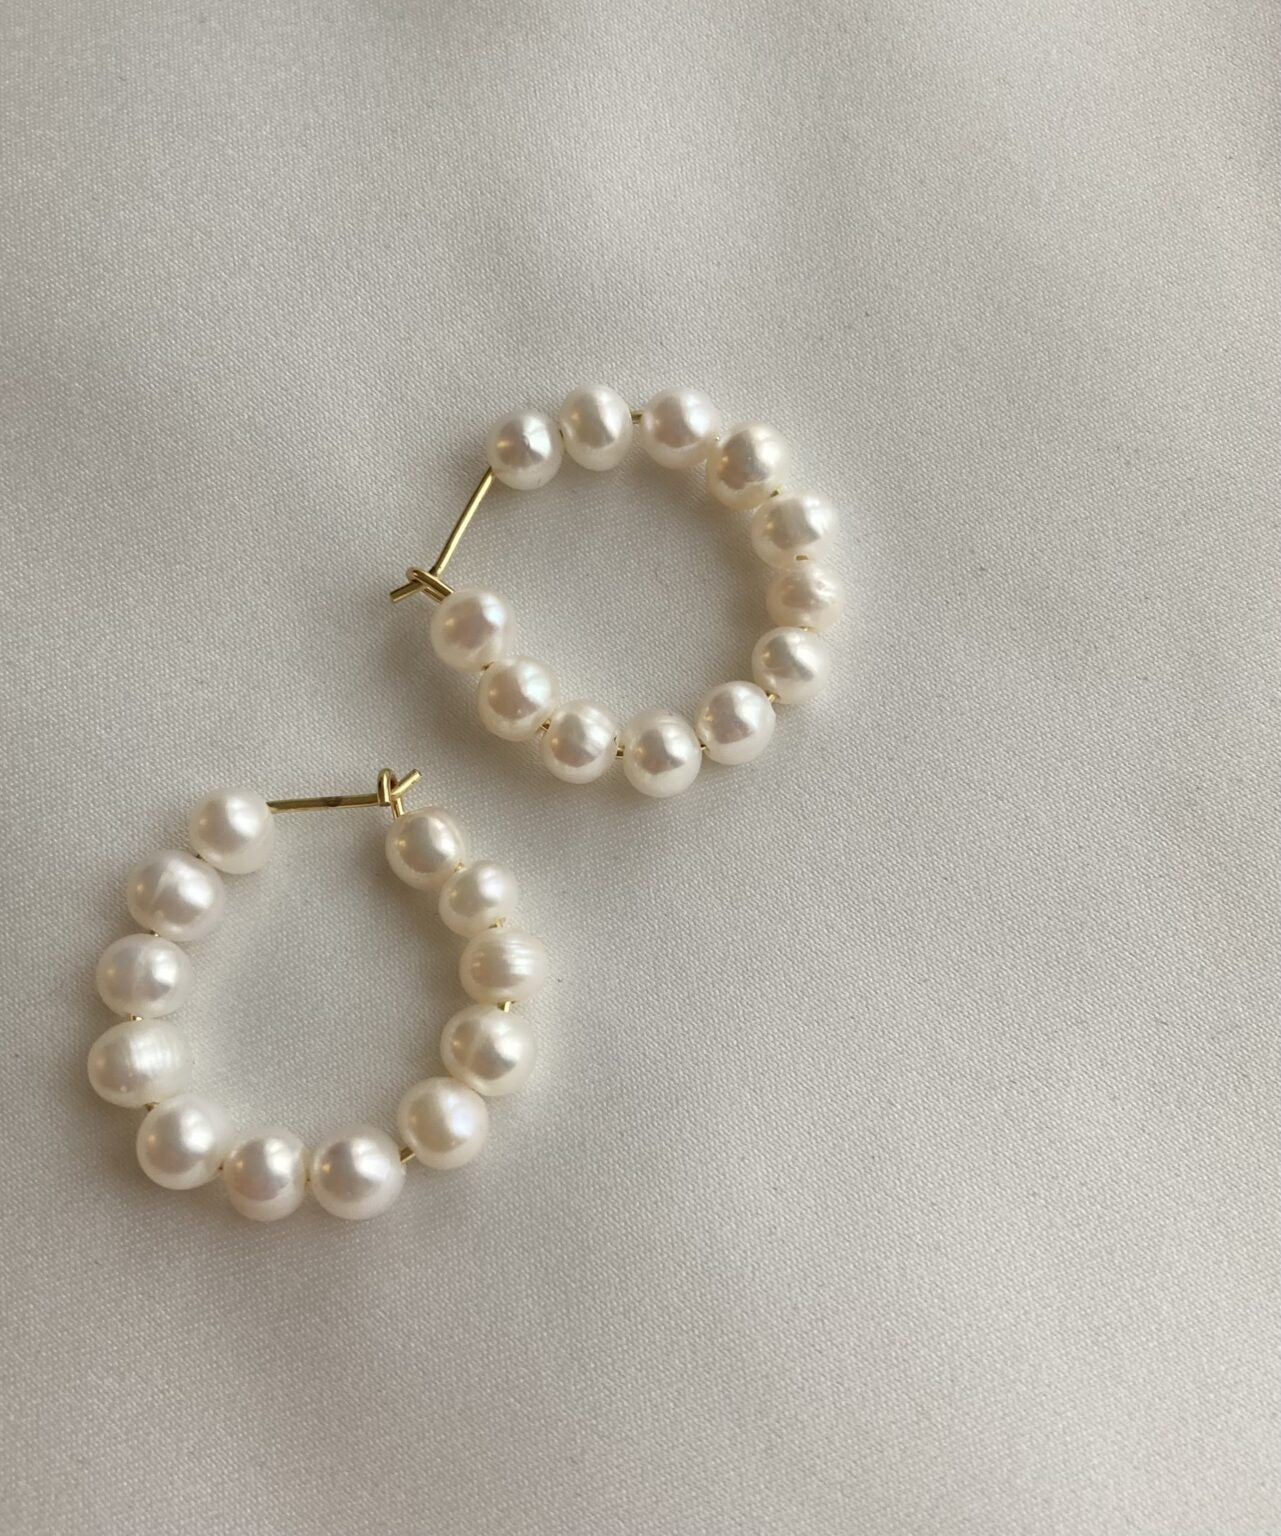 The Mama Kin - Small Serena earrings